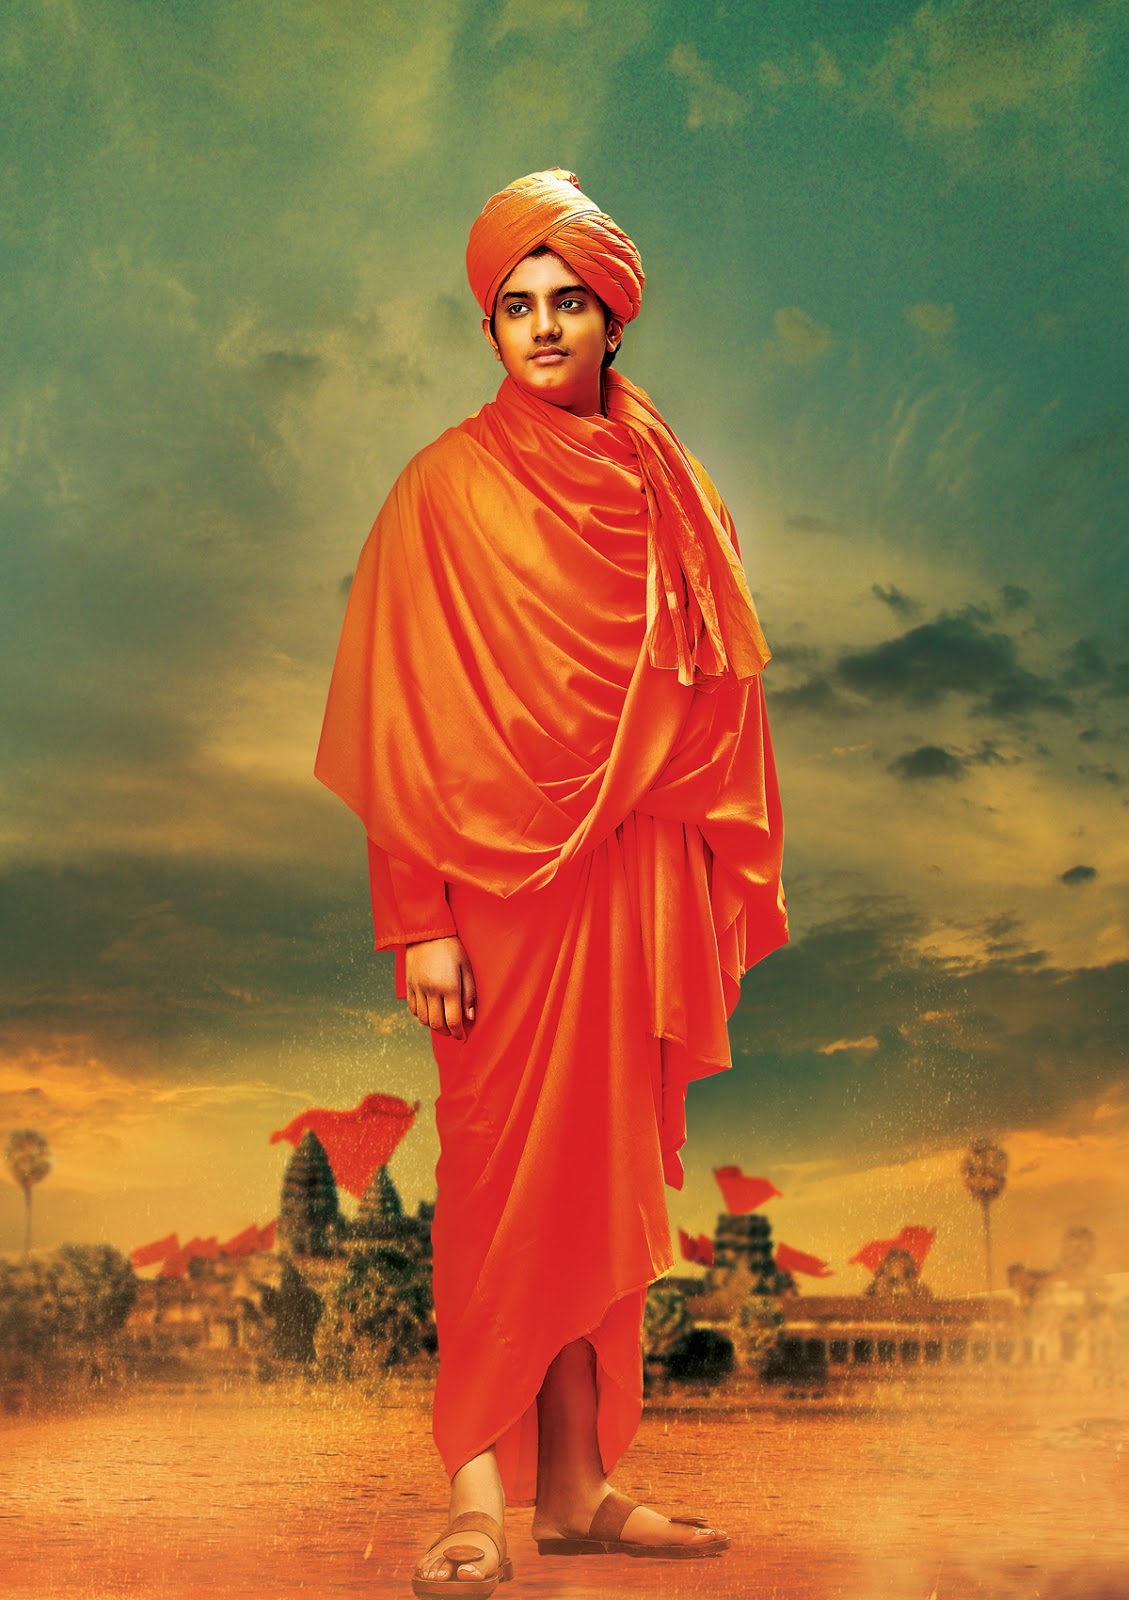 The Light: Swami Vivekananda Full Movie In Hindi Torrent 720p